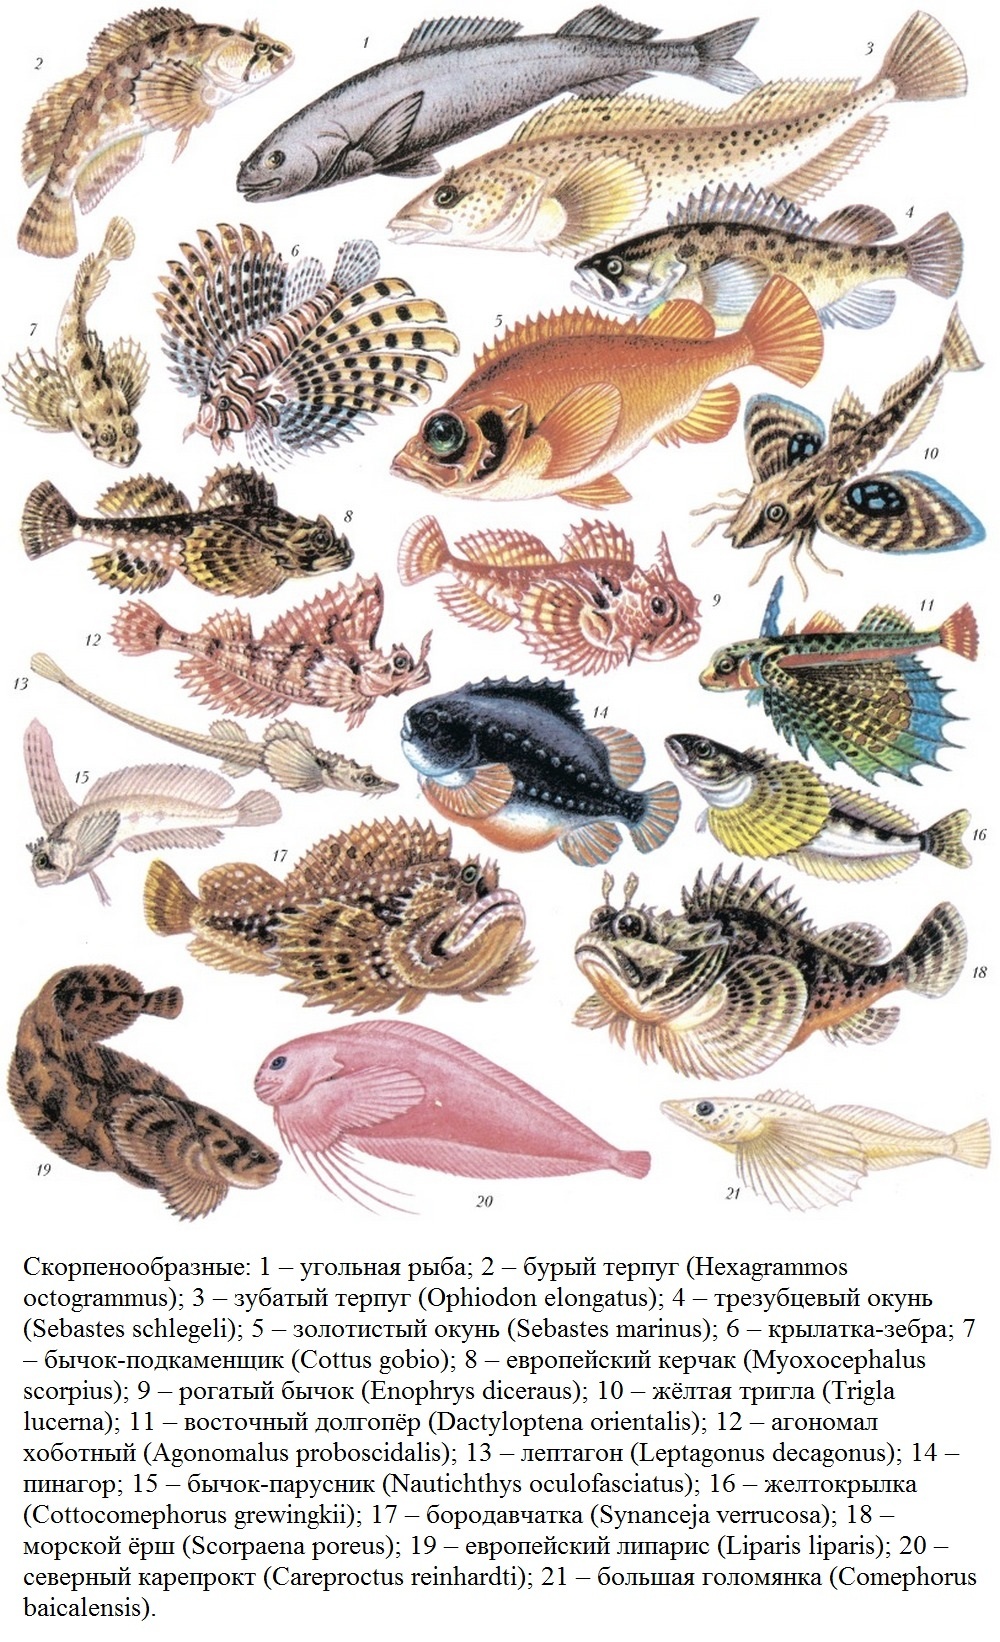 Scorpaeniformes